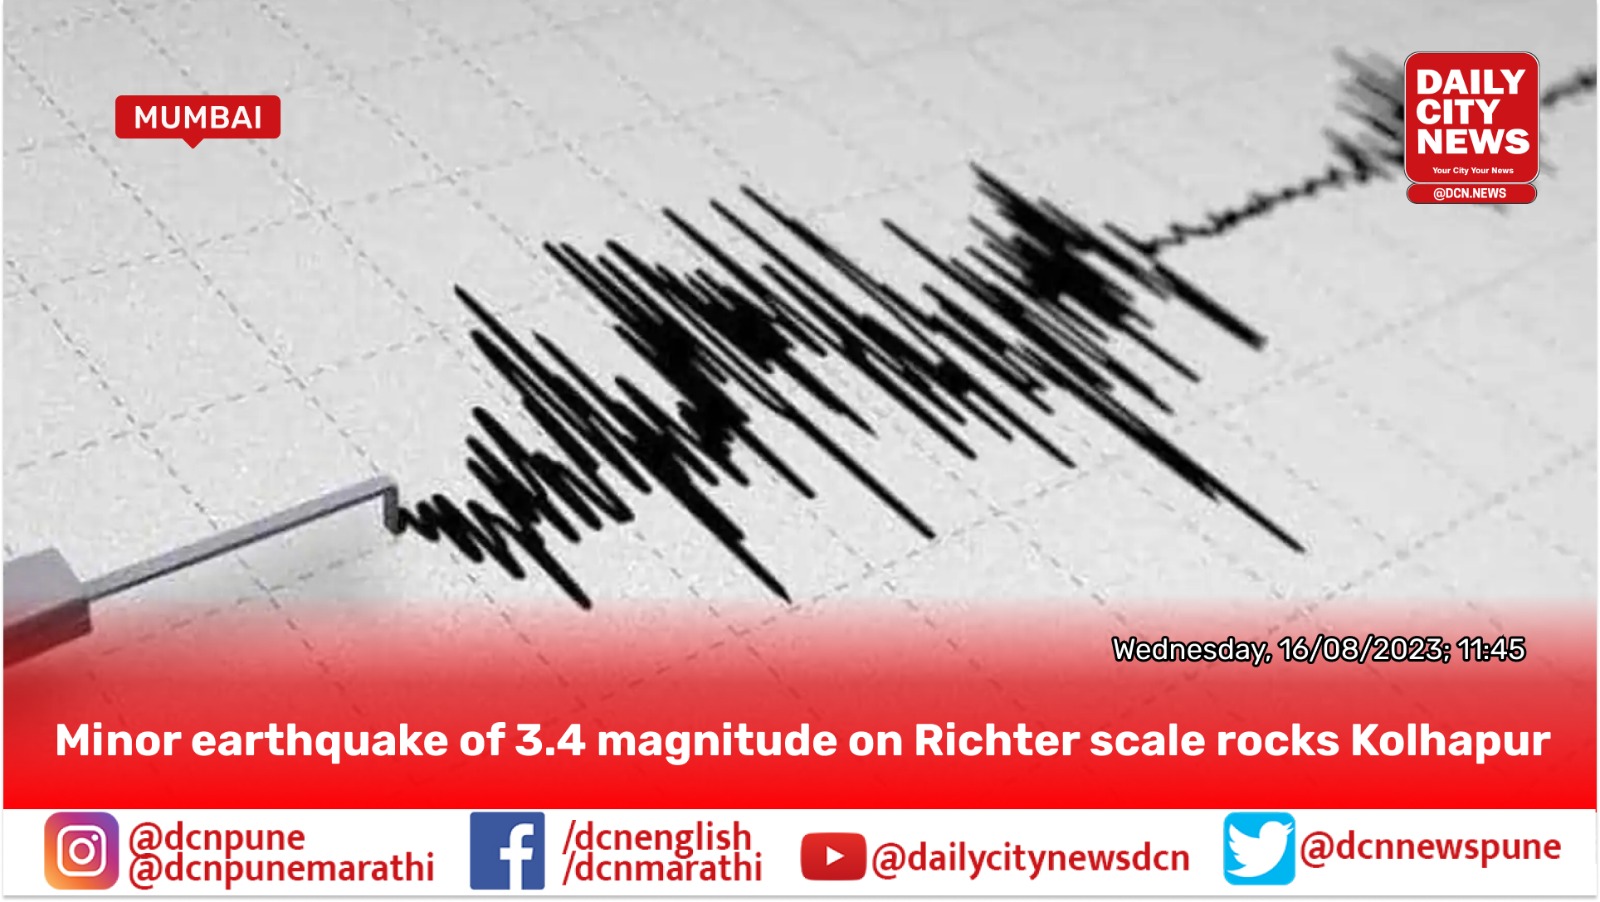 Minor earthquake of 3.4 magnitude on Richter scale rocks Kolhapur